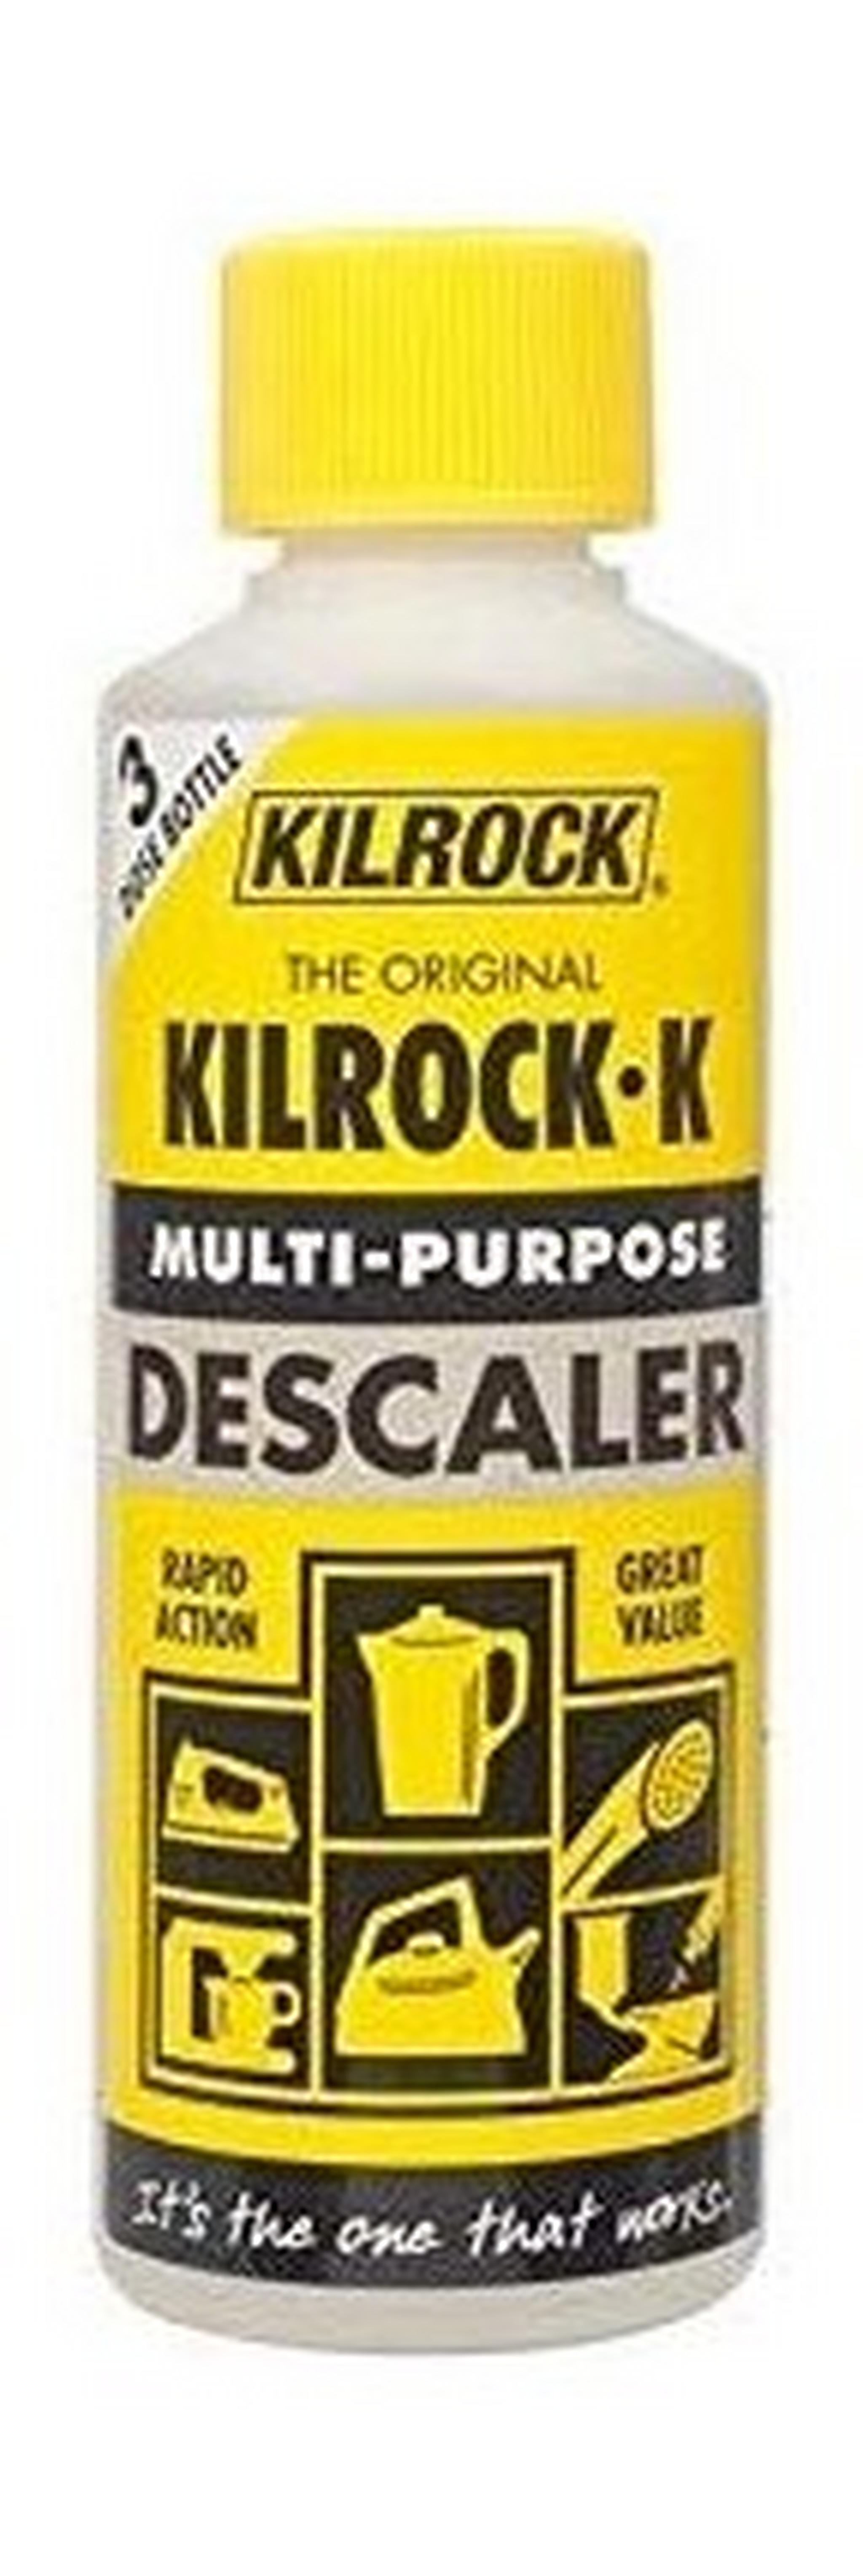 Kilrock-K Multi-Purpose Descaler 250ml - (3 Dose Bottle)